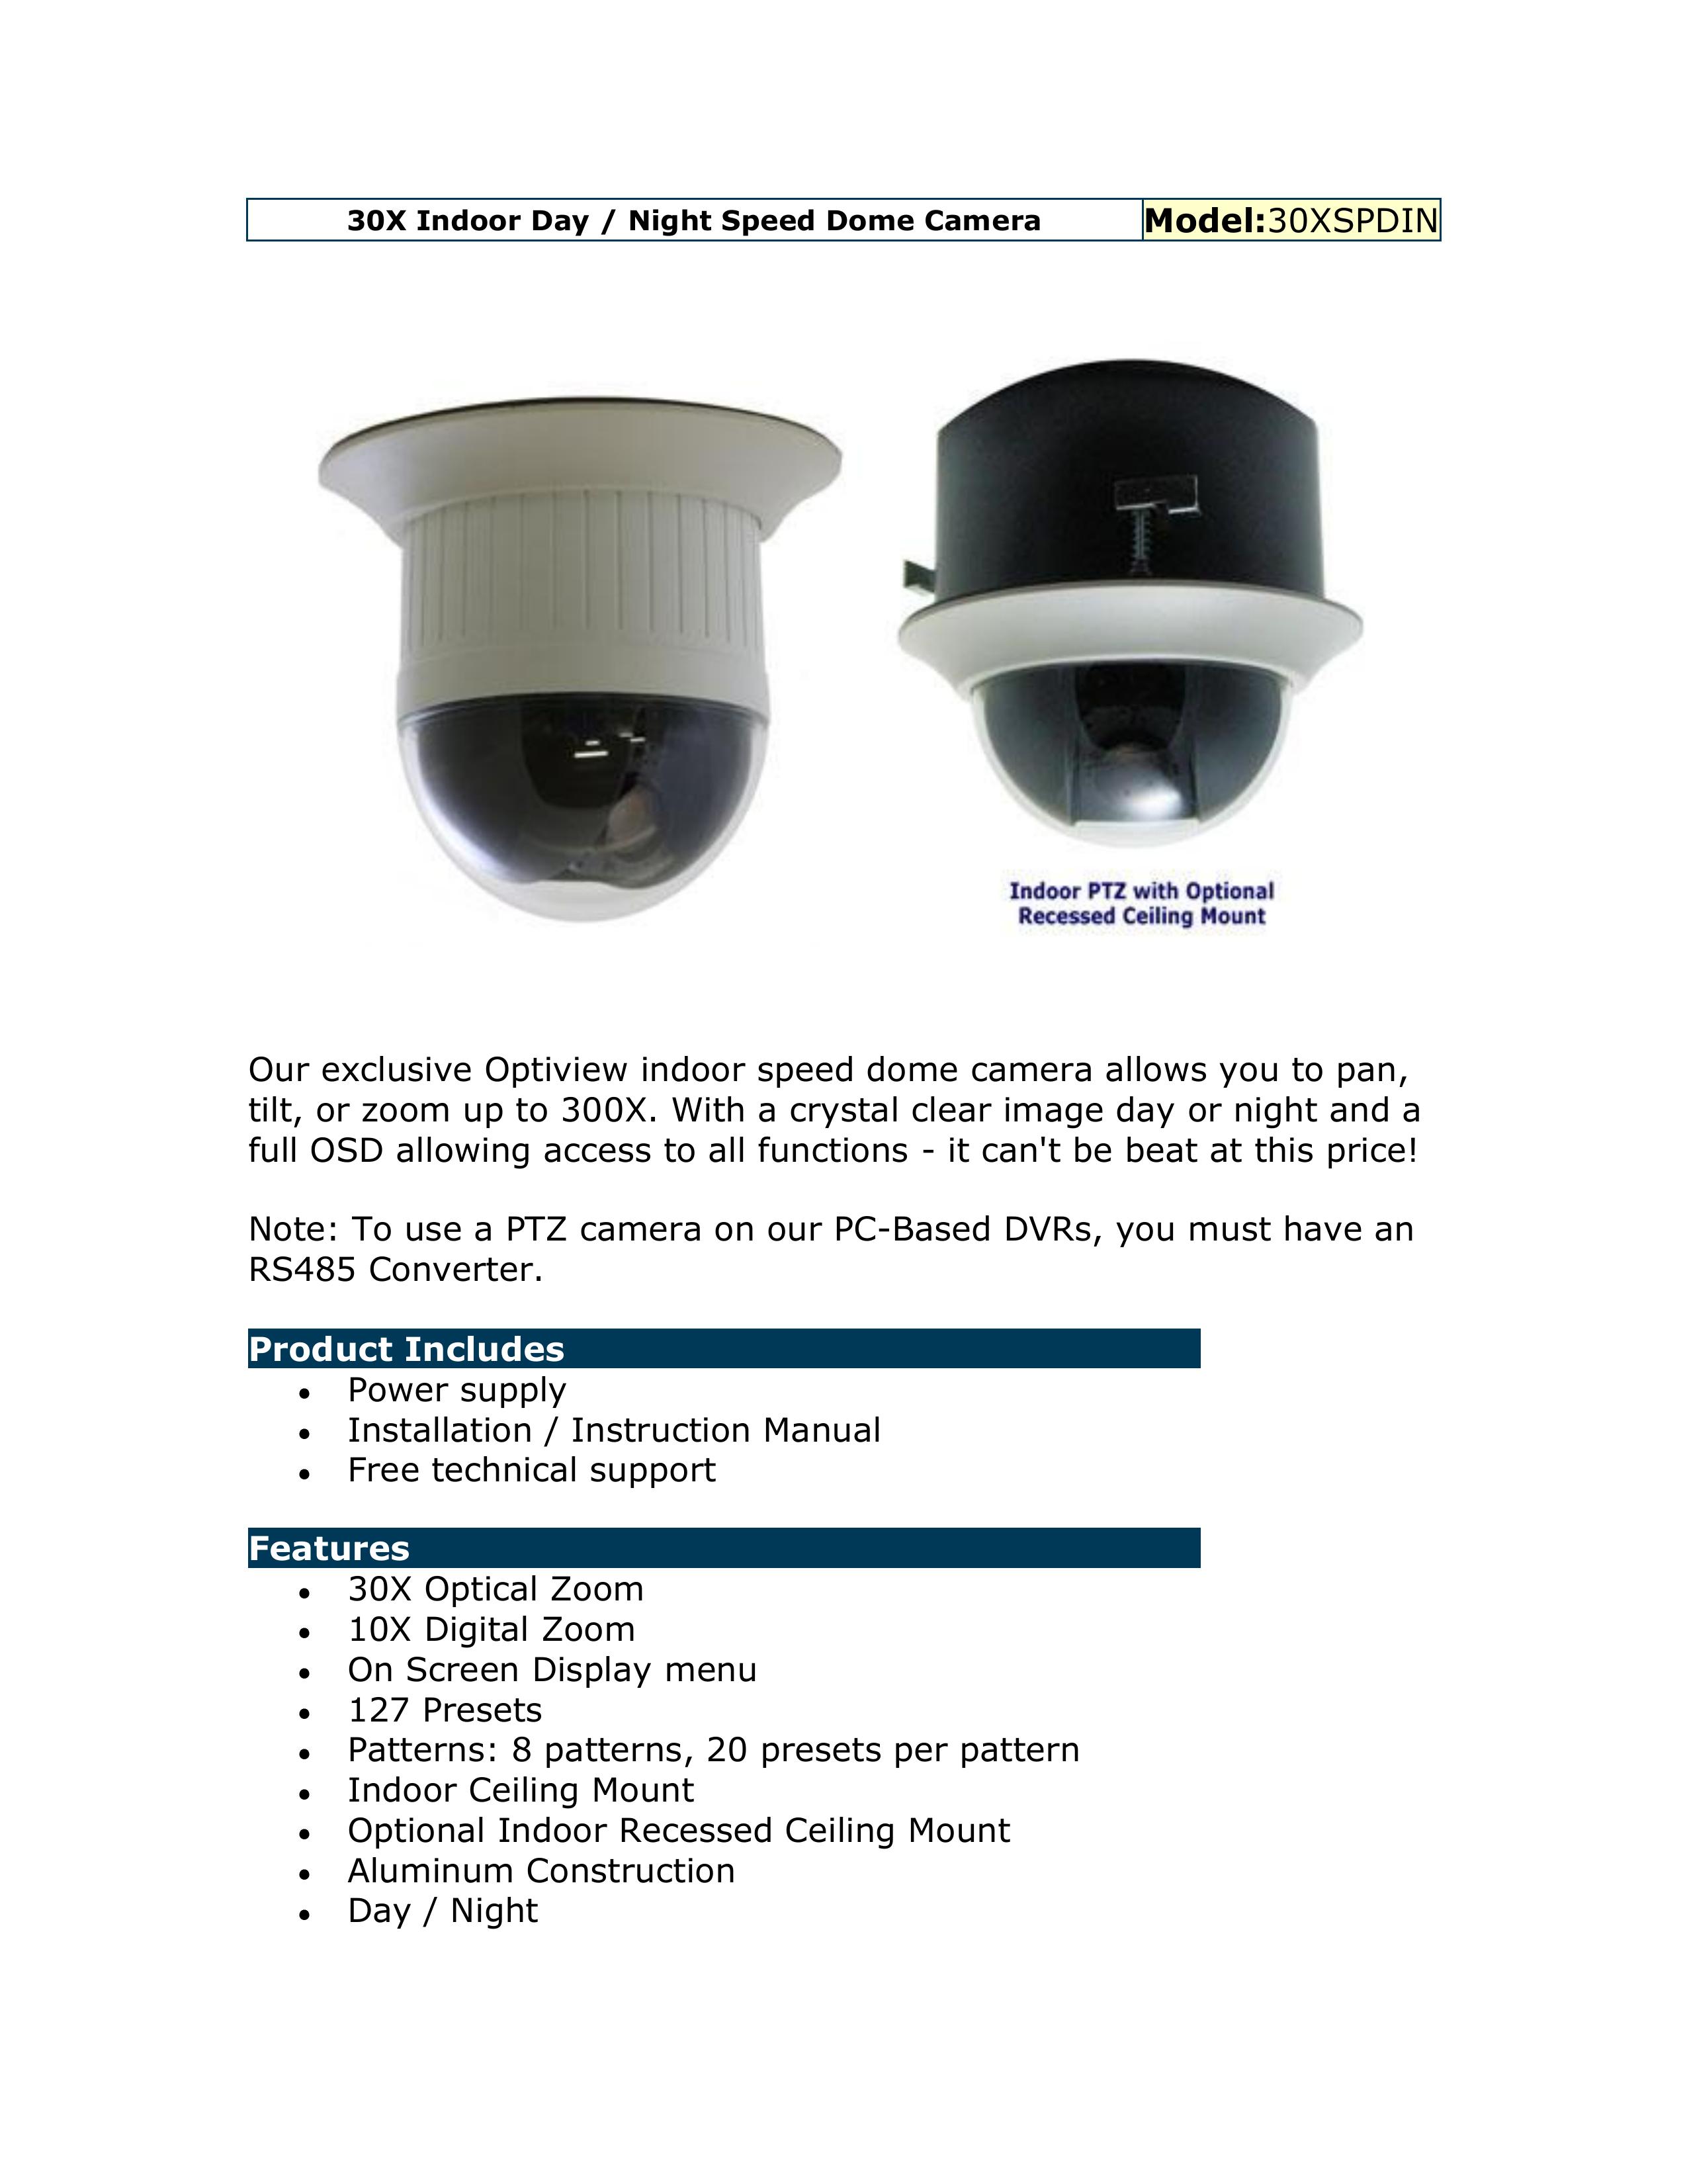 Optiview 30XSPDIN Security Camera User Manual